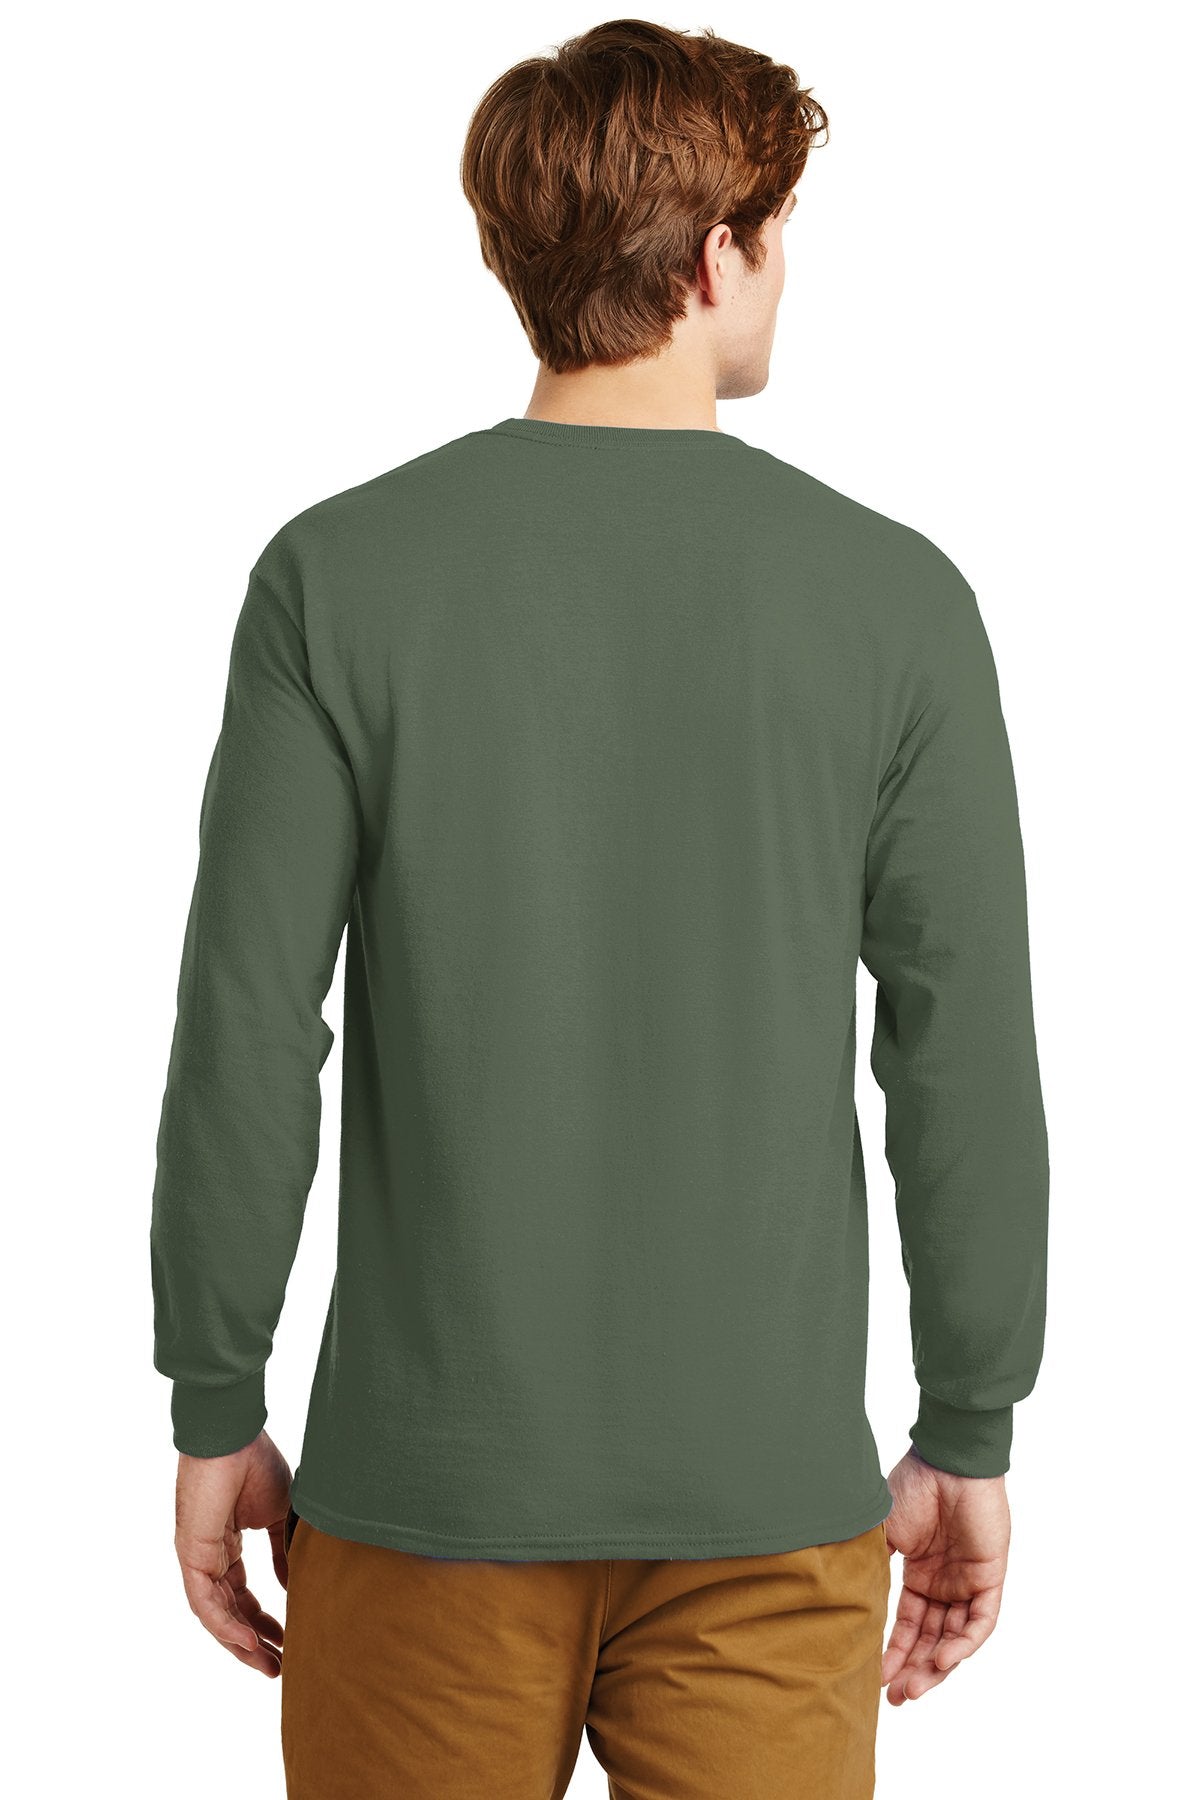 gildan ultra cotton long sleeve t shirt g2400 military green